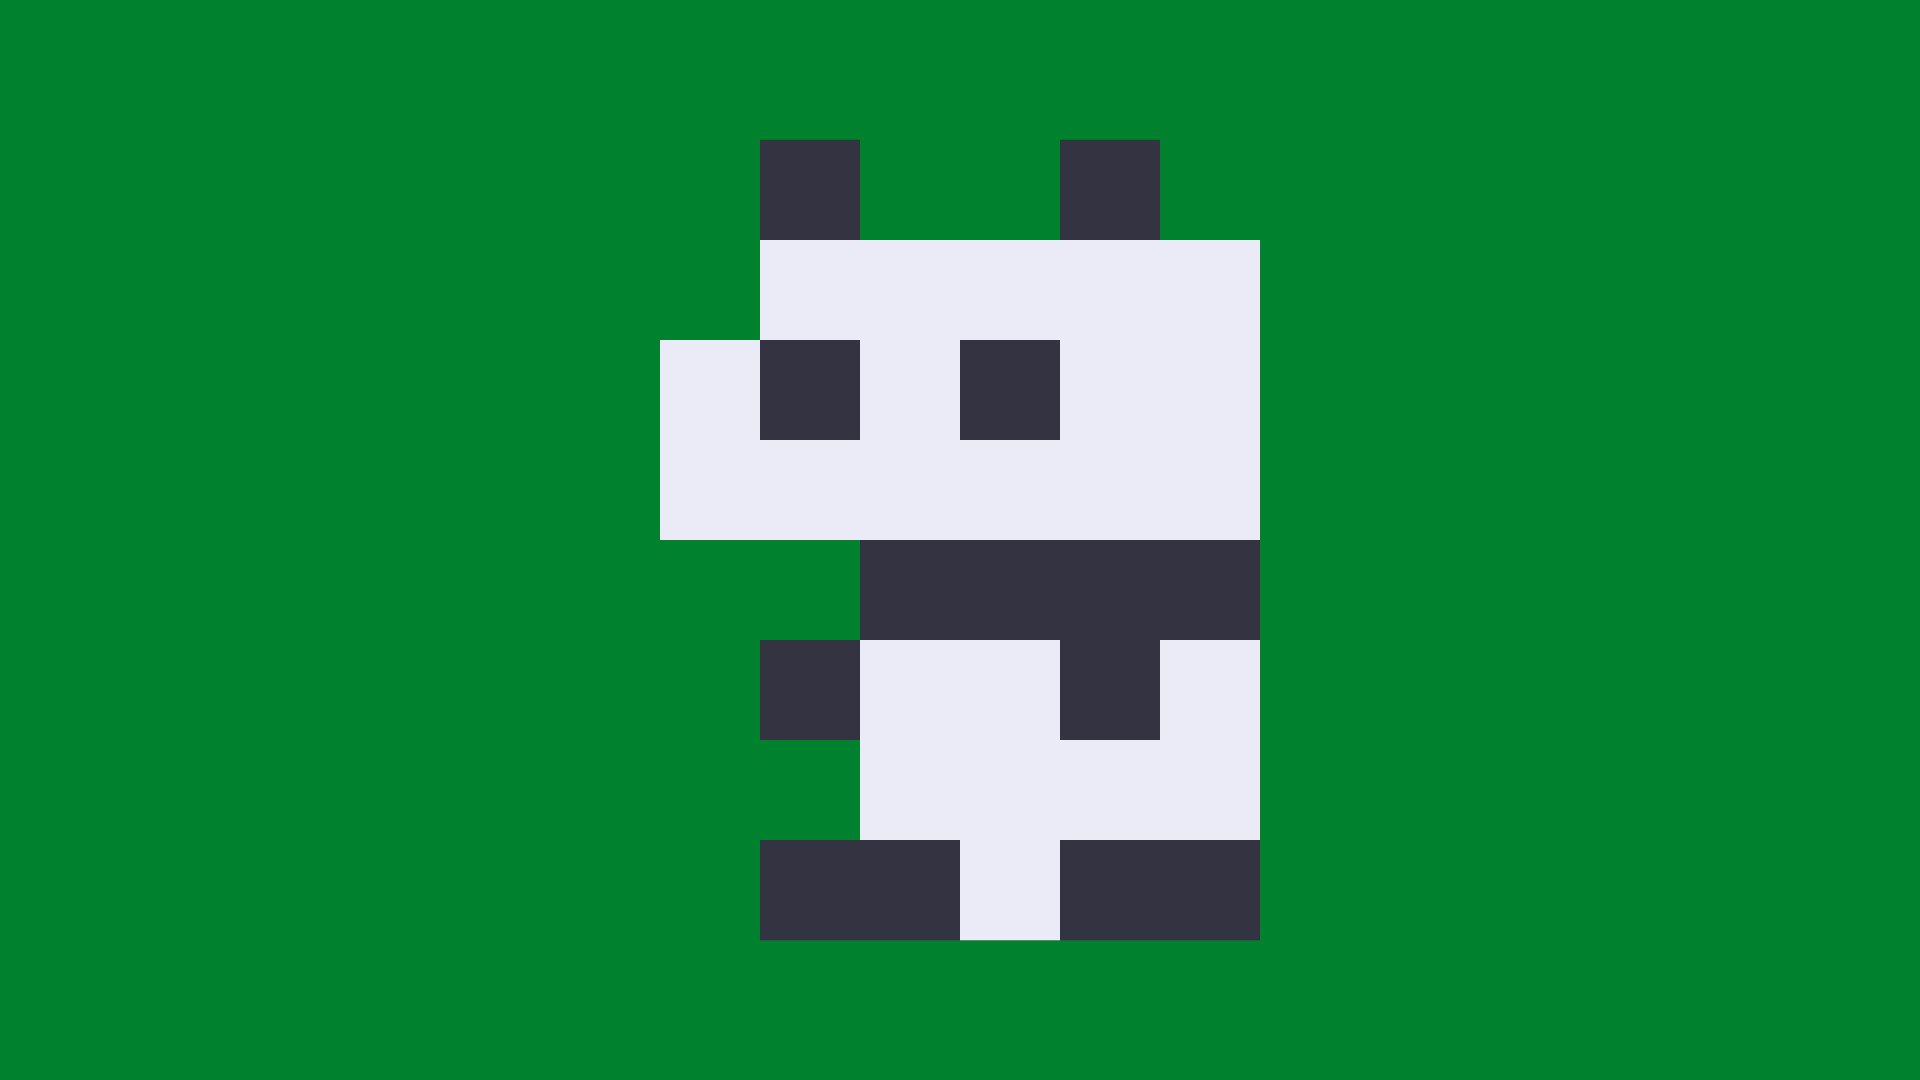 Creating a Pixel Art Icon of a Panda